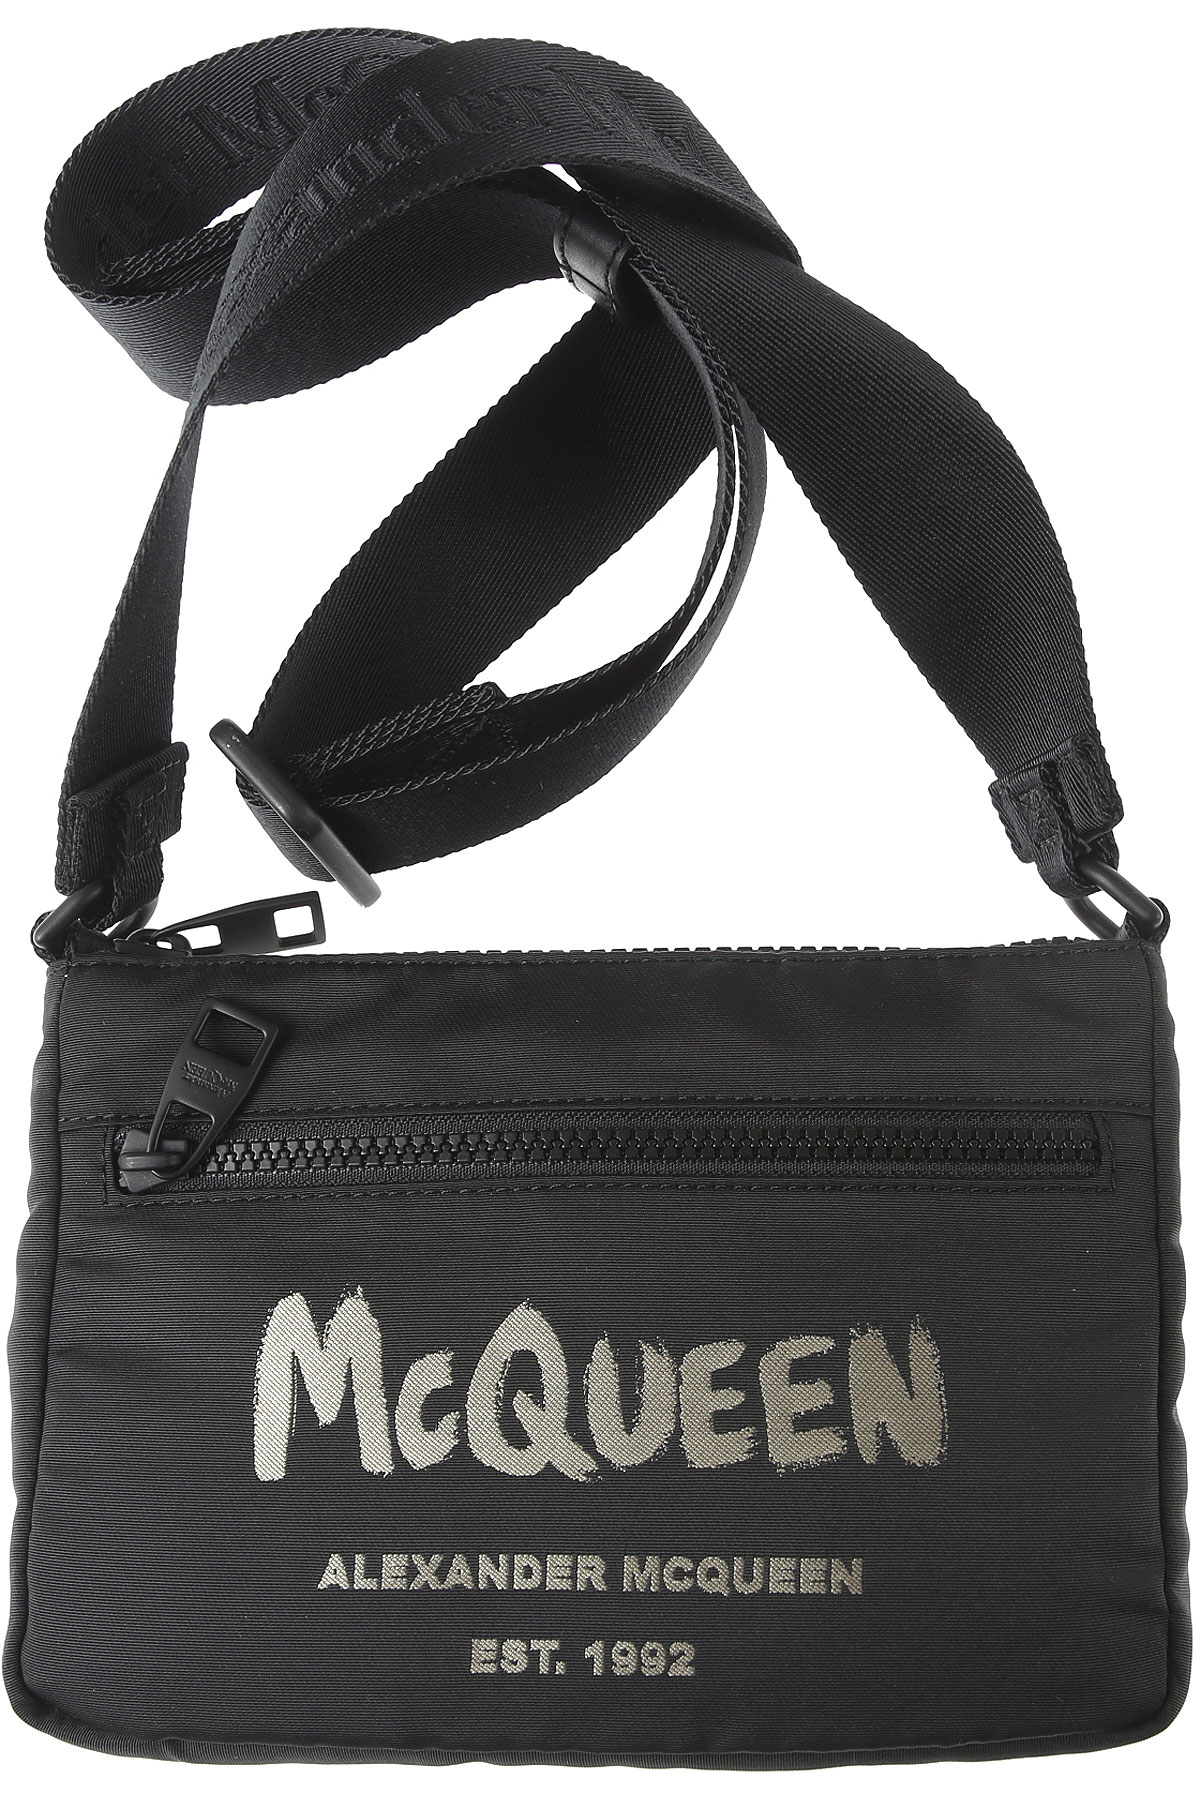 Briefcases Alexander McQueen, Style code: 663144-1aabw-1073